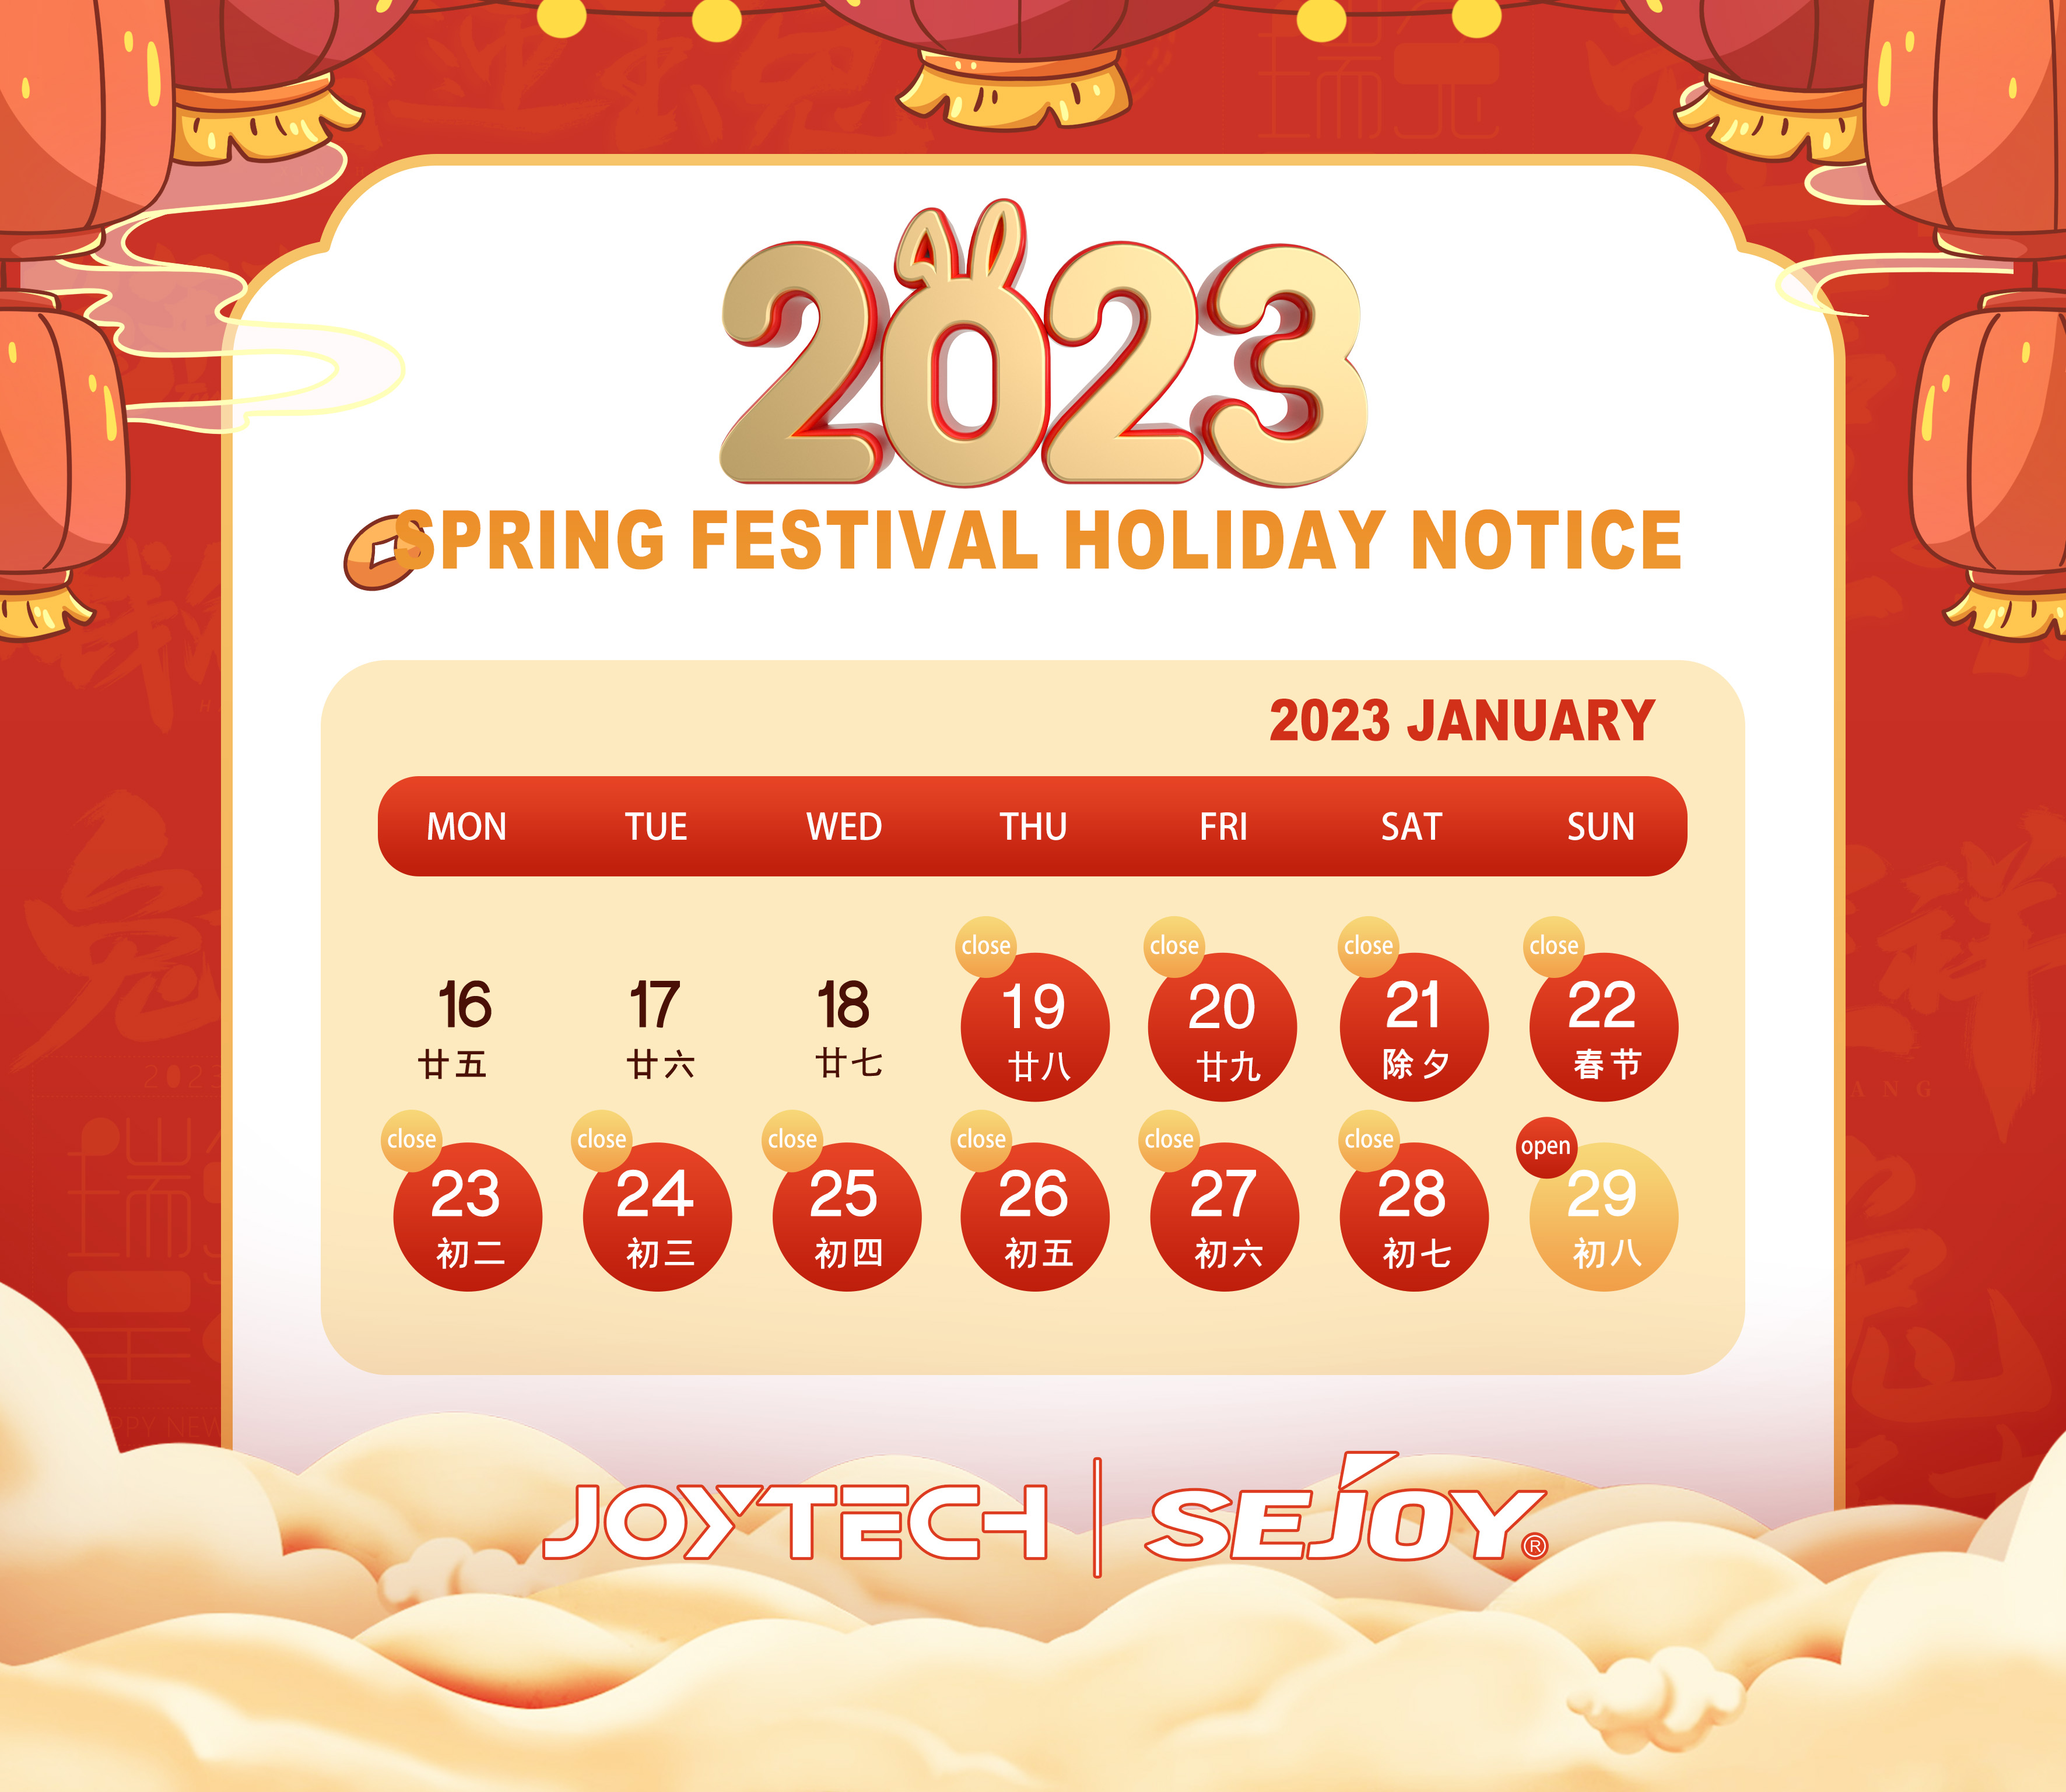 Kabar Holiday Festival Spring Joytech